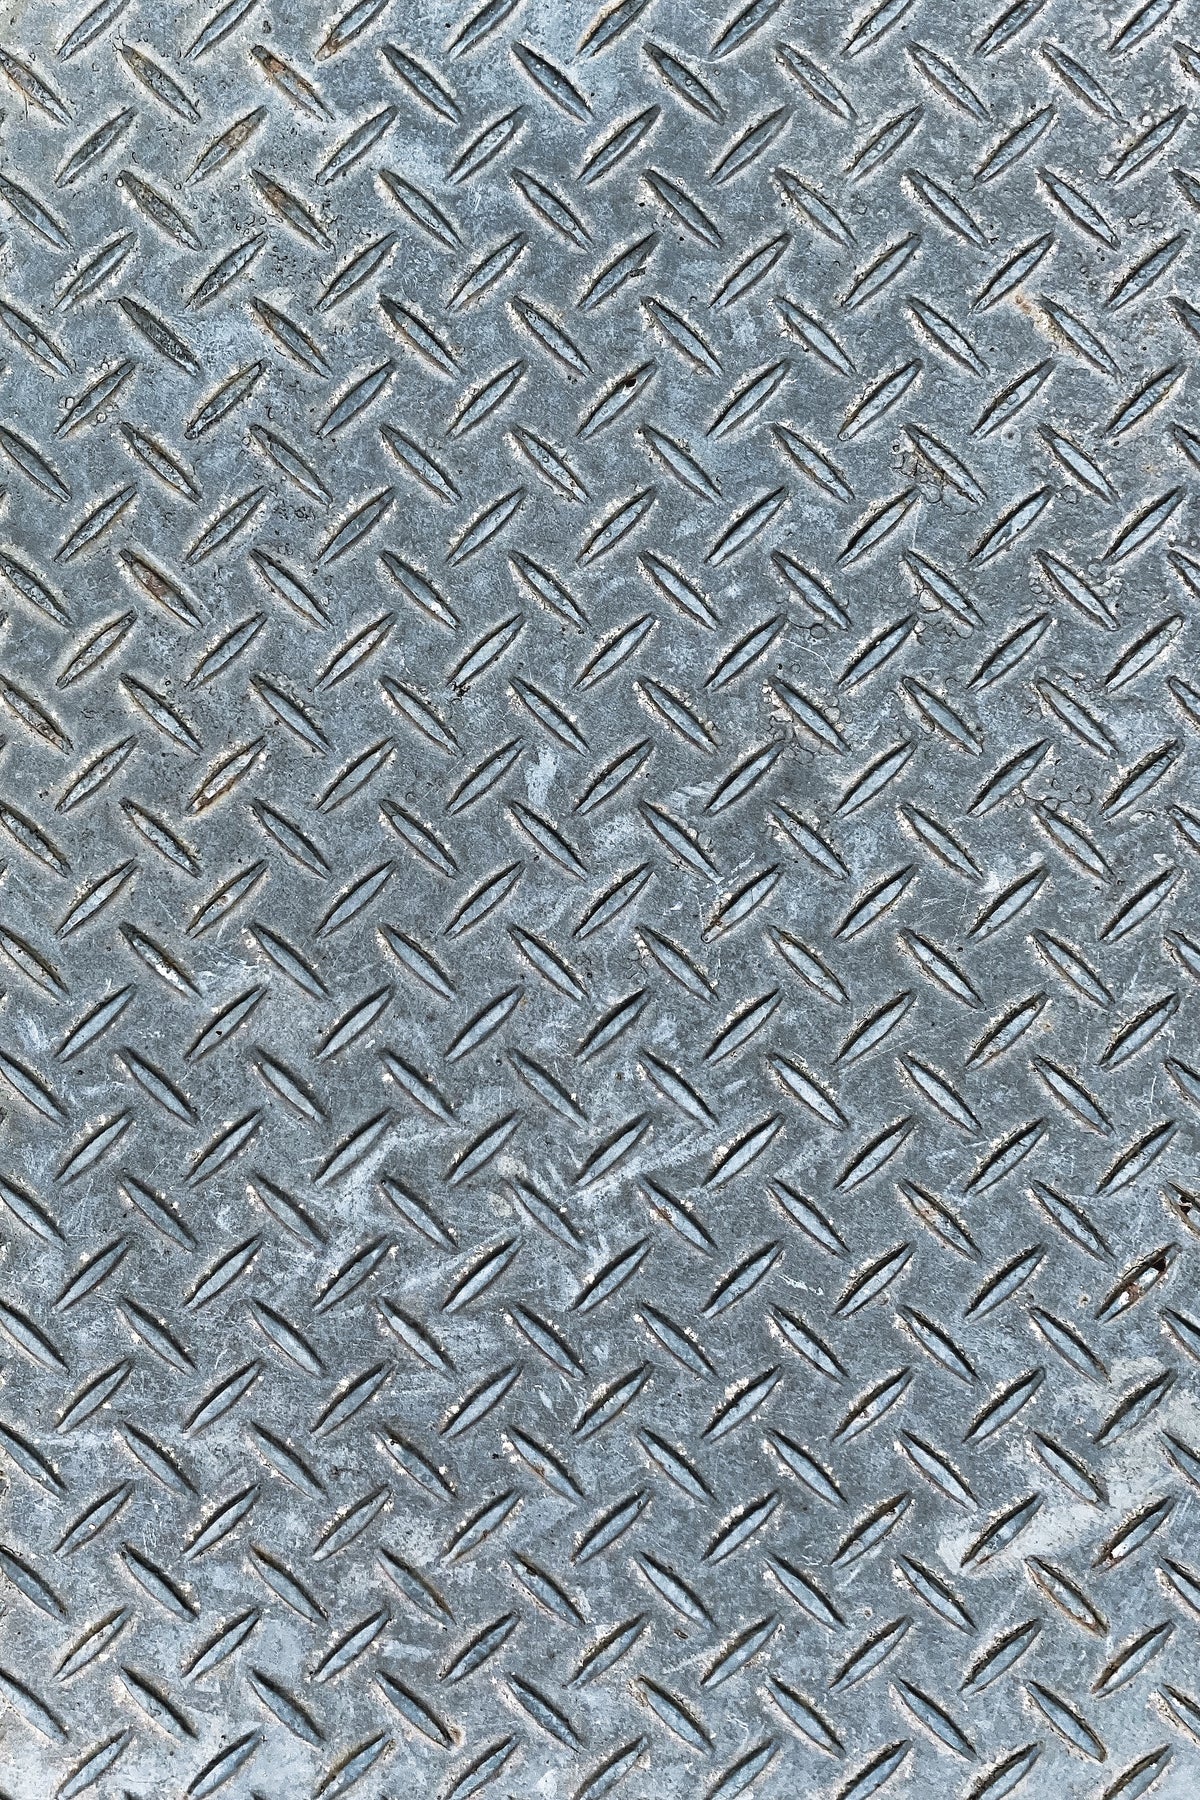 close up texture of metal criss cross tread